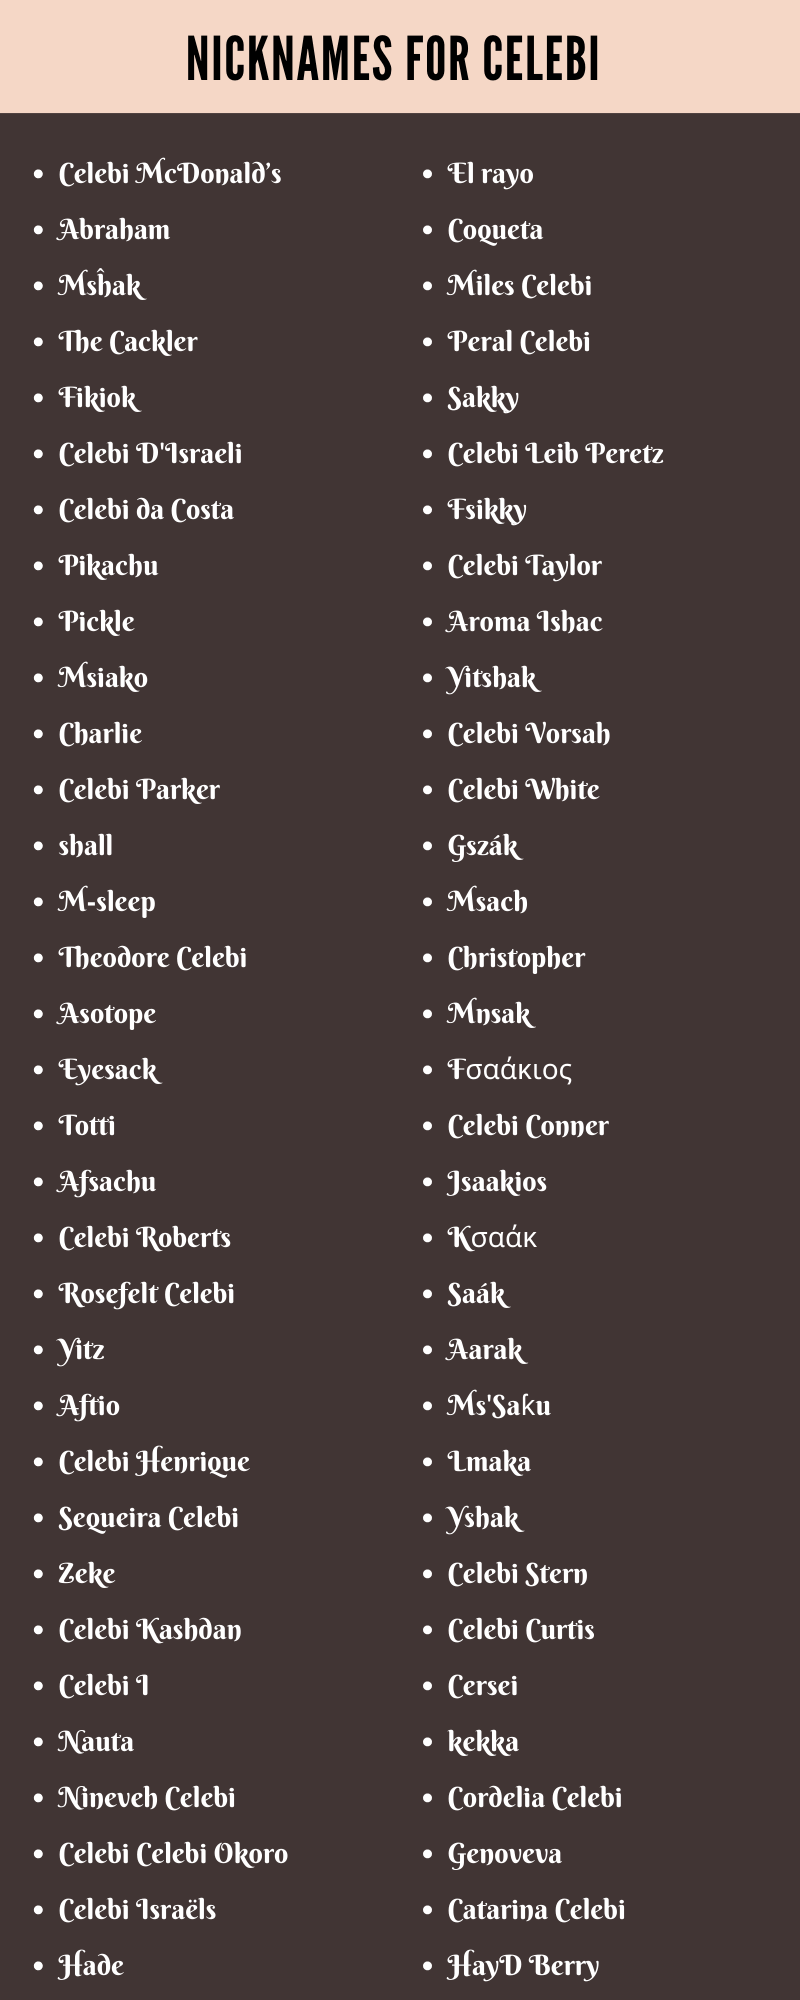 Nicknames For Celebi